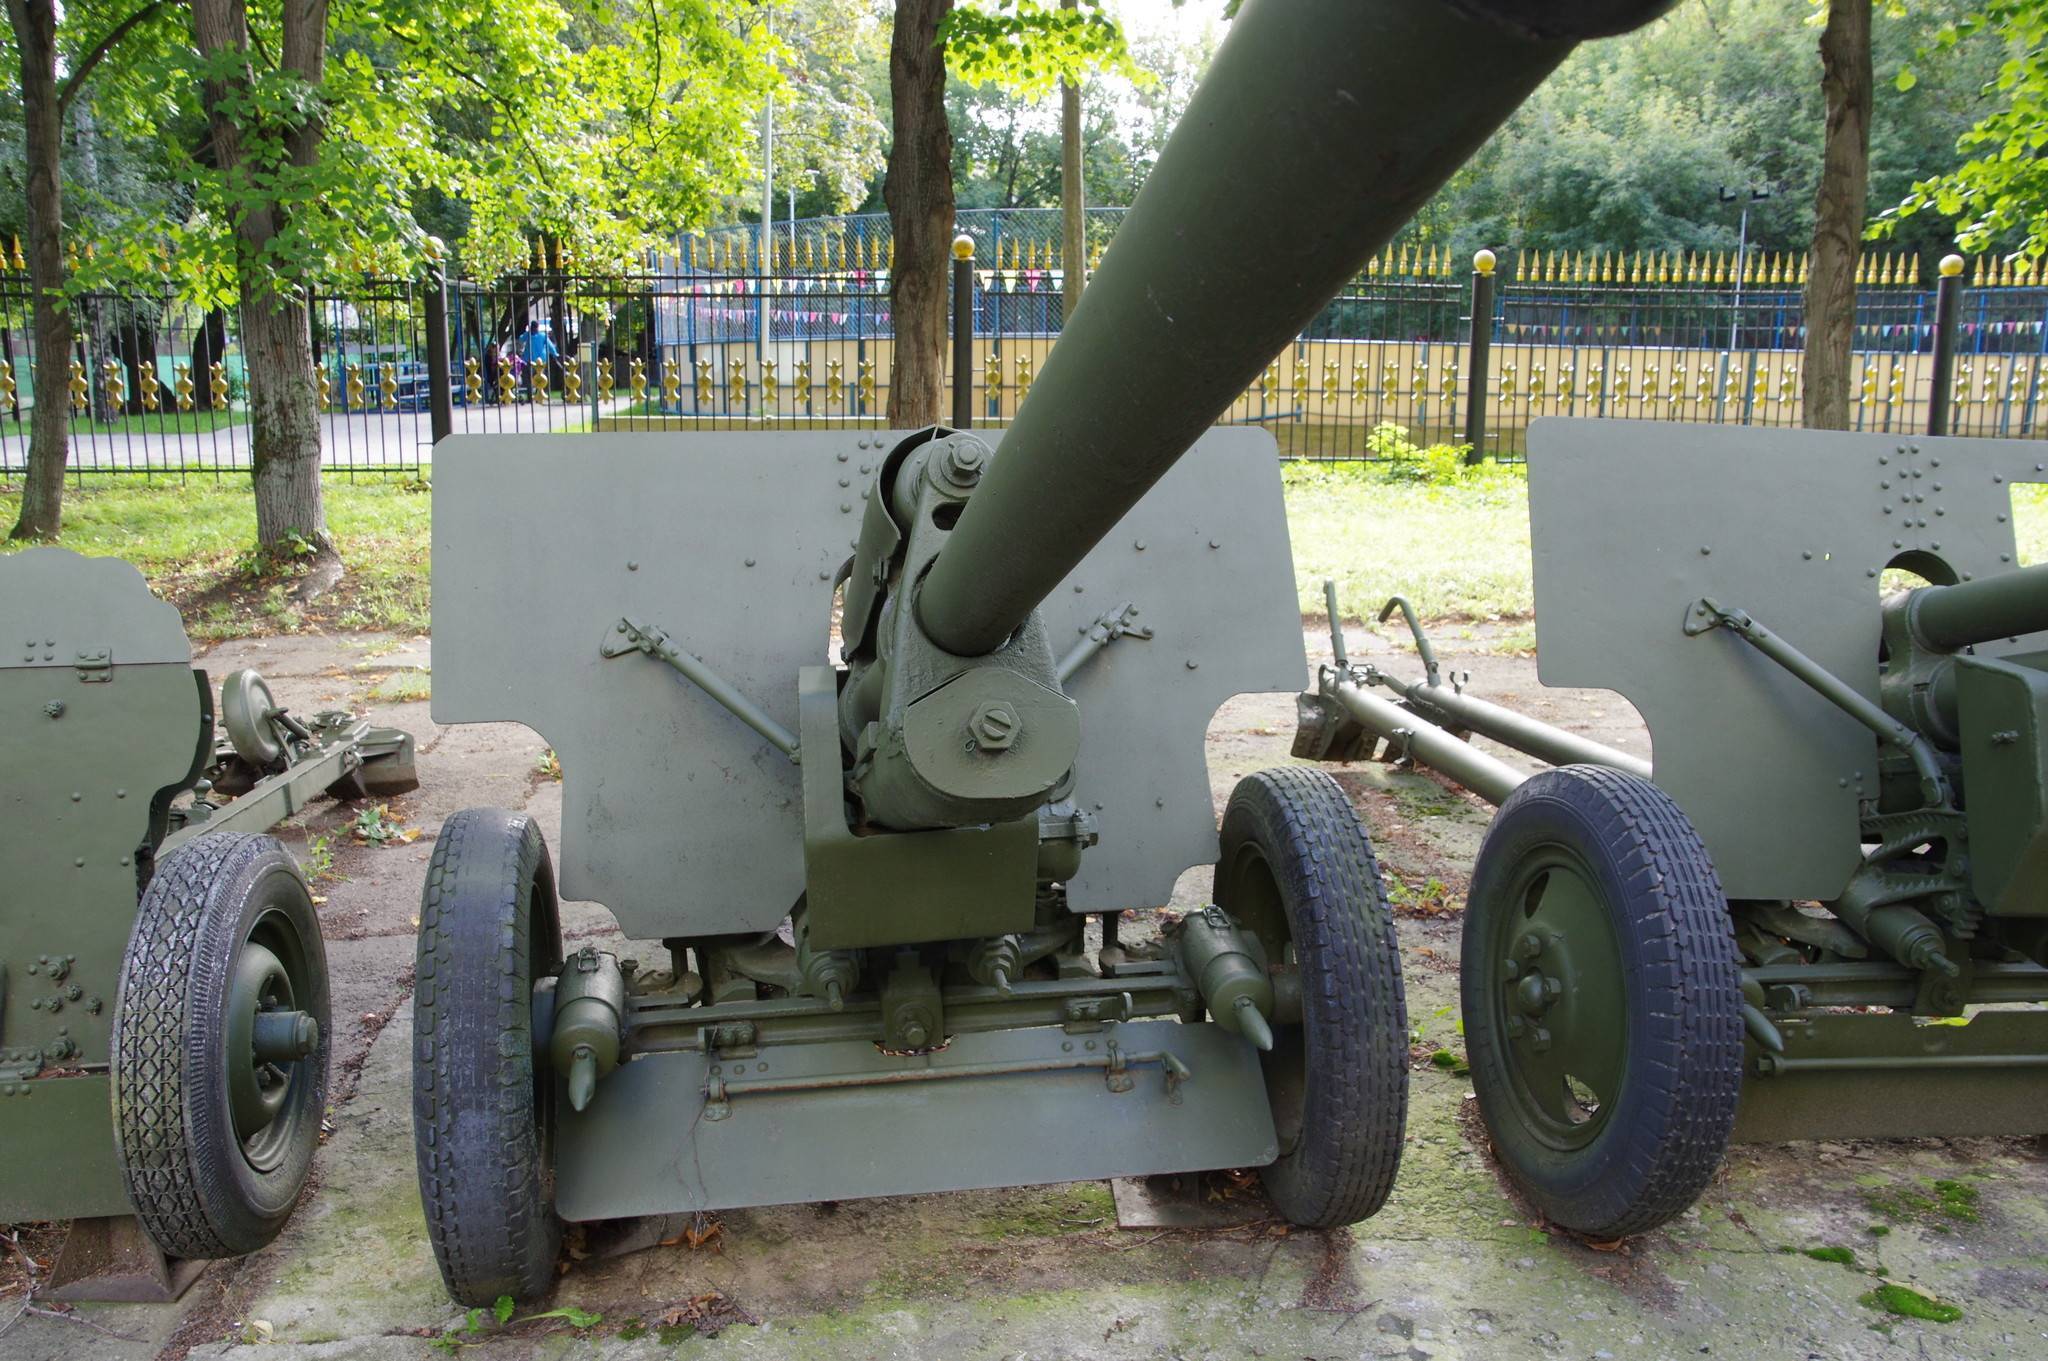 76-мм пушка обр. 1942 г. (зис-3)